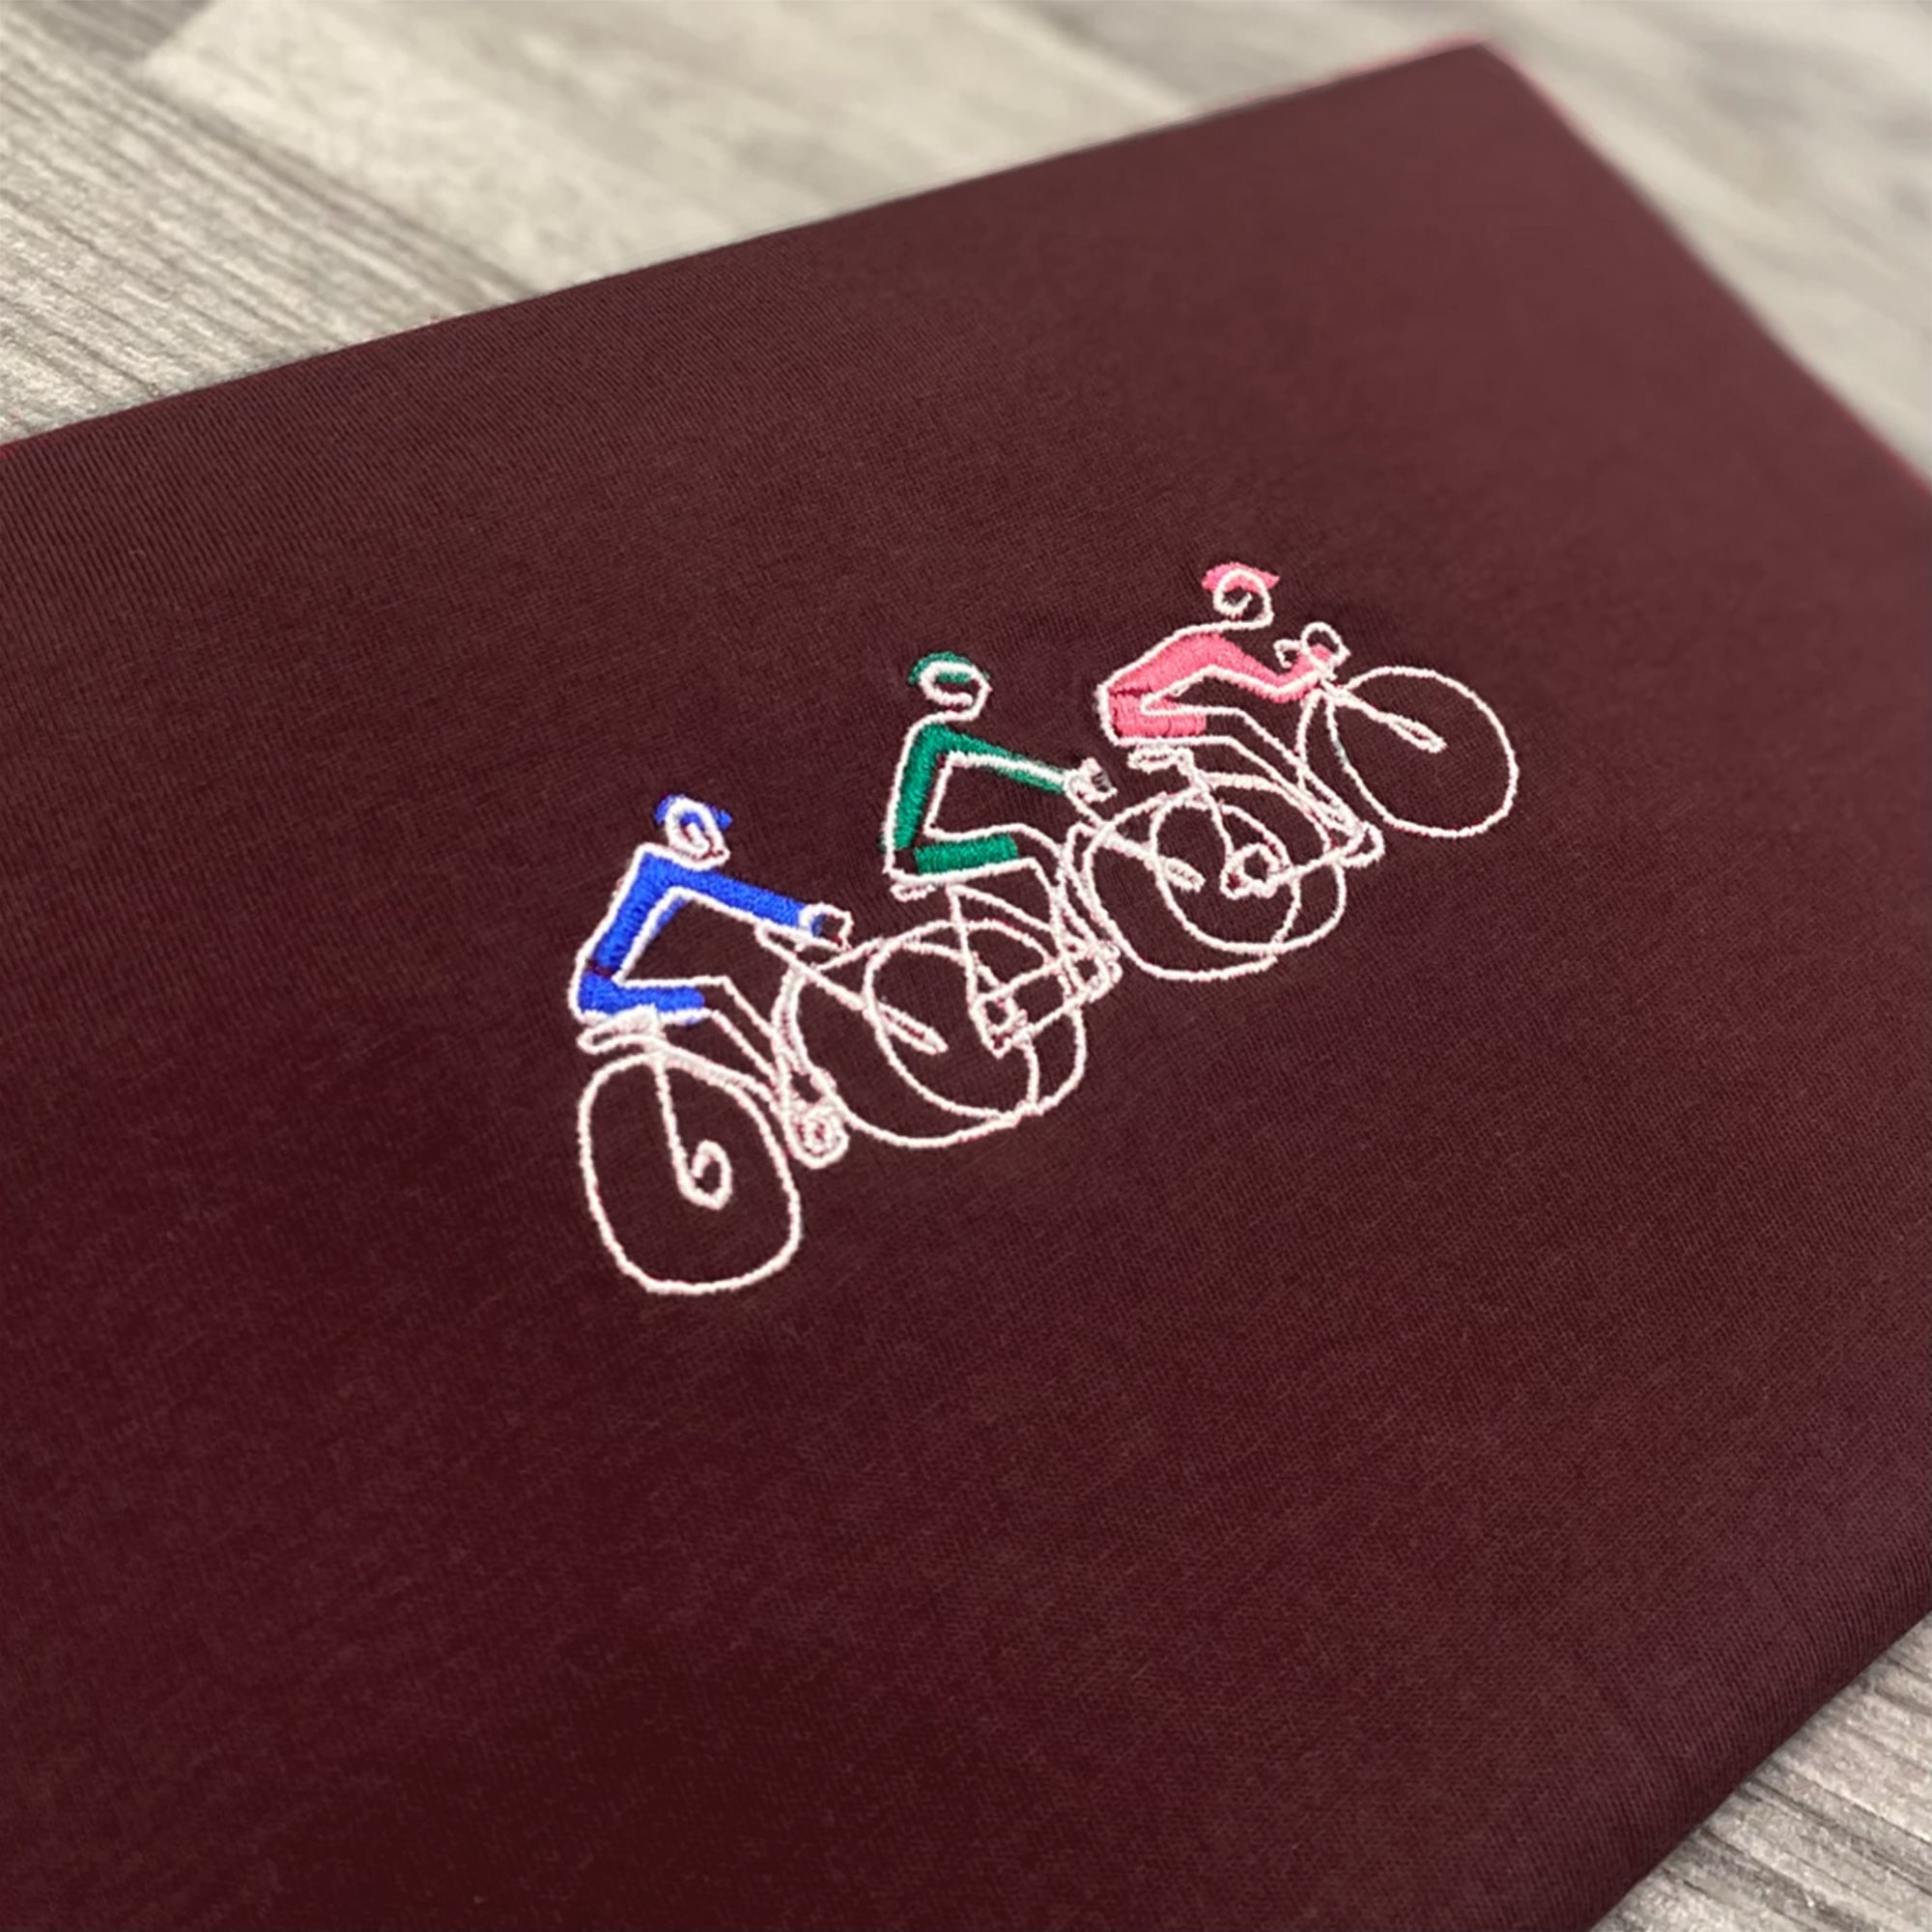 Womens Bike Tour Embroidered Hoodie